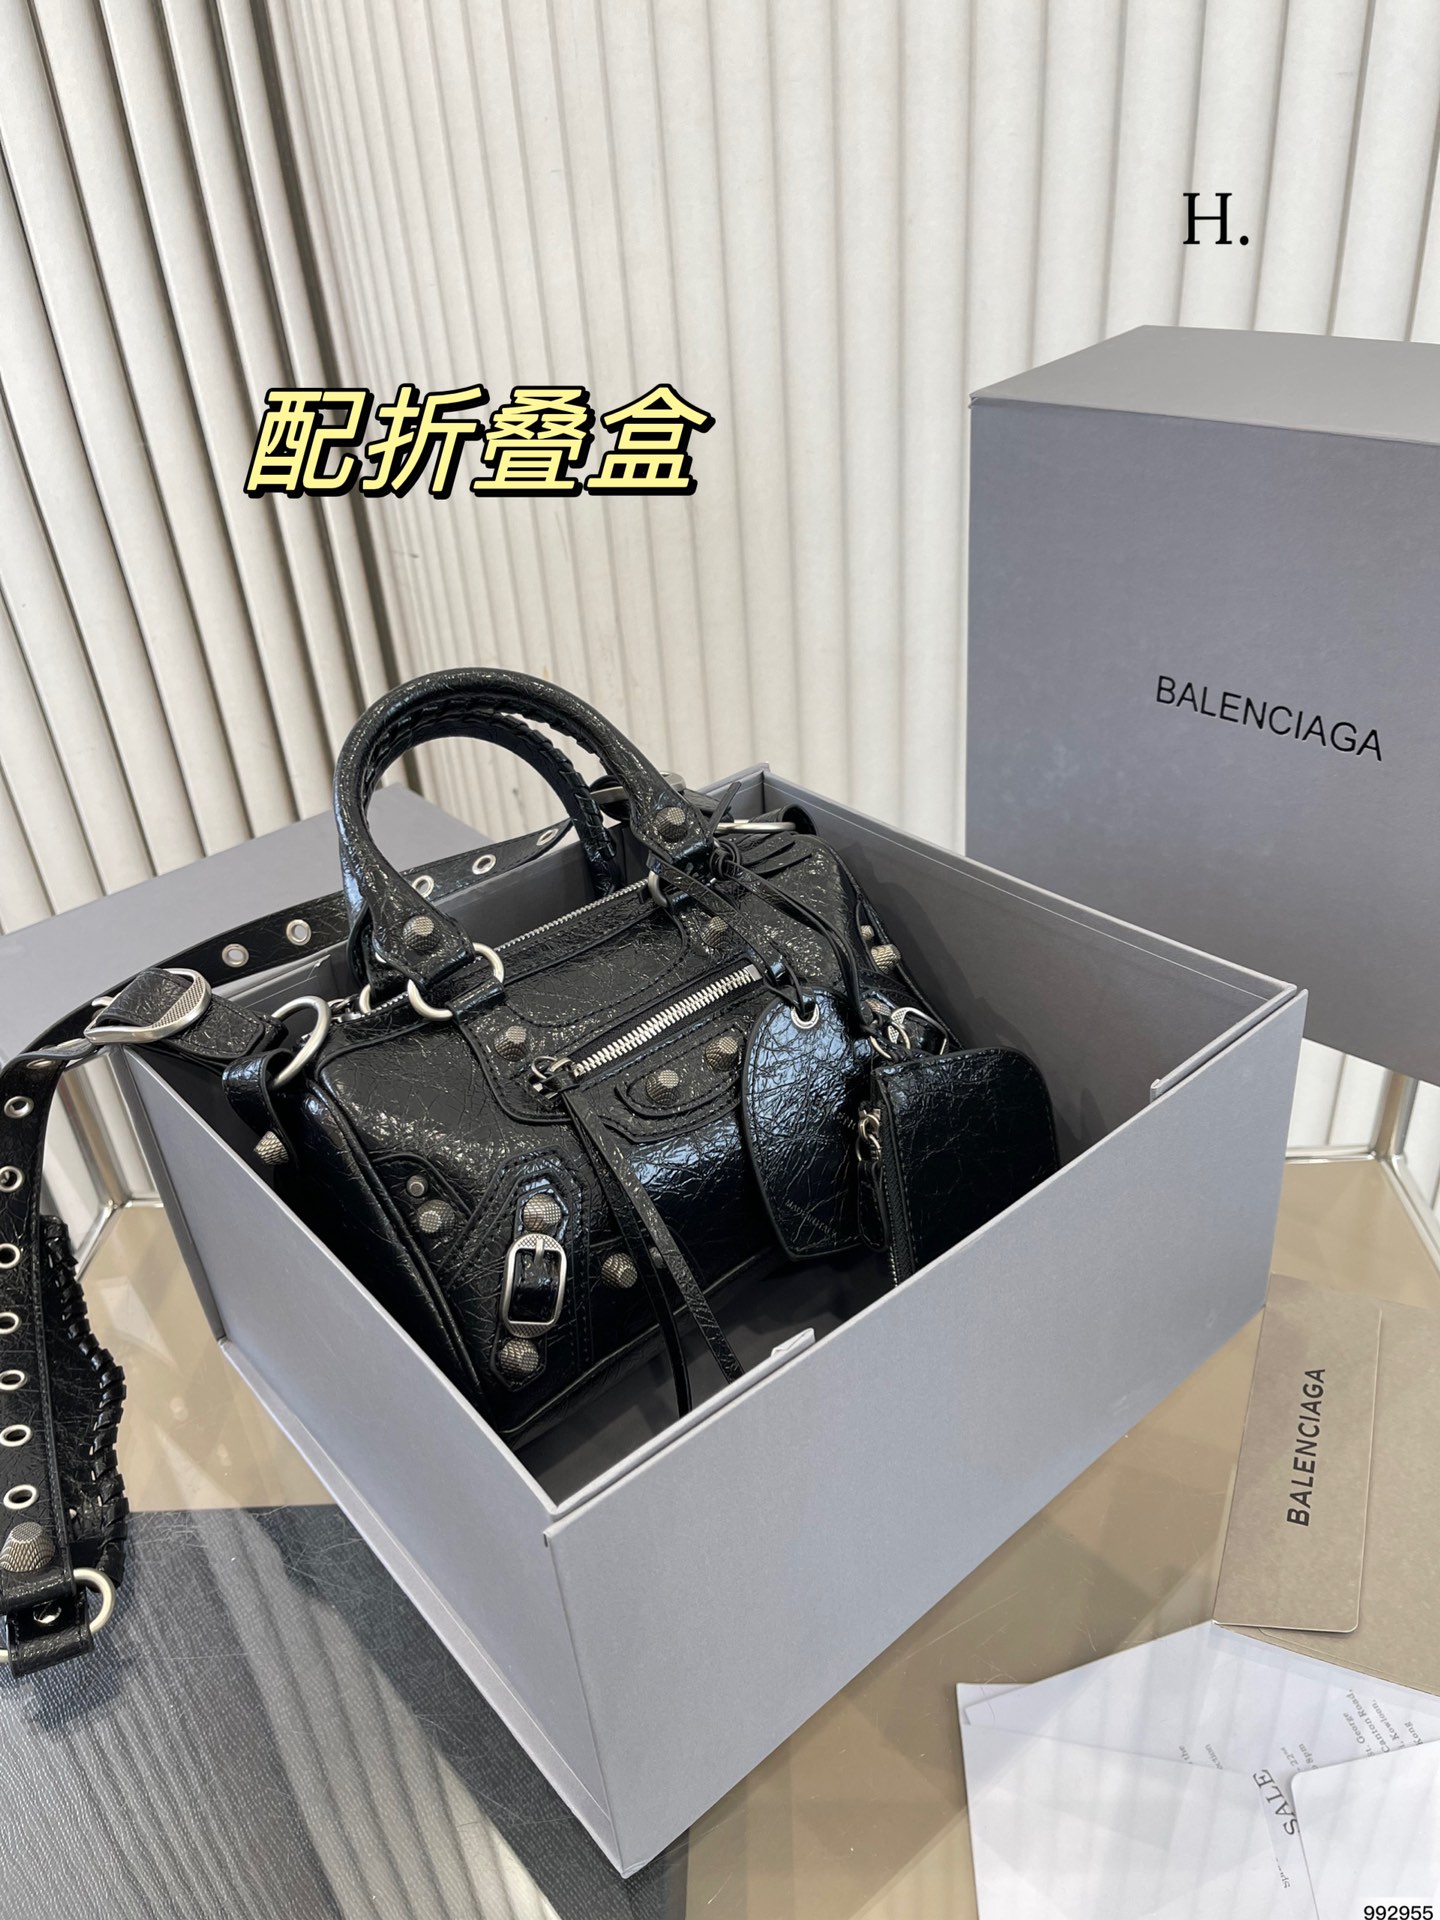 Top brands like
 Balenciaga Bags Handbags Fashion